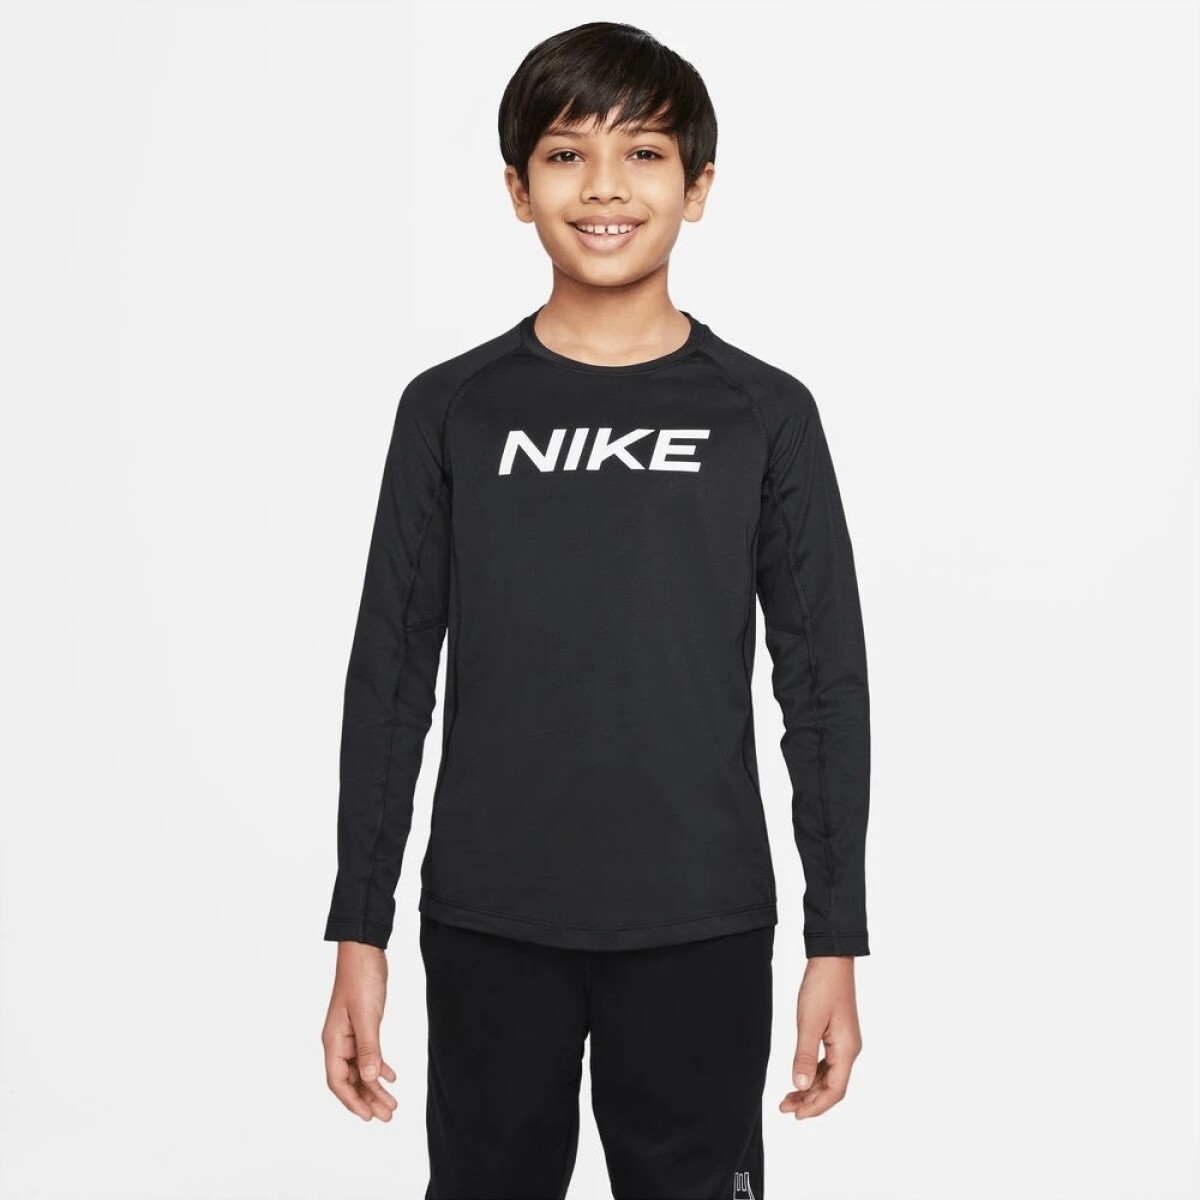 Remera Termica Nike Niño Np Df Ls Top Black - S/C 